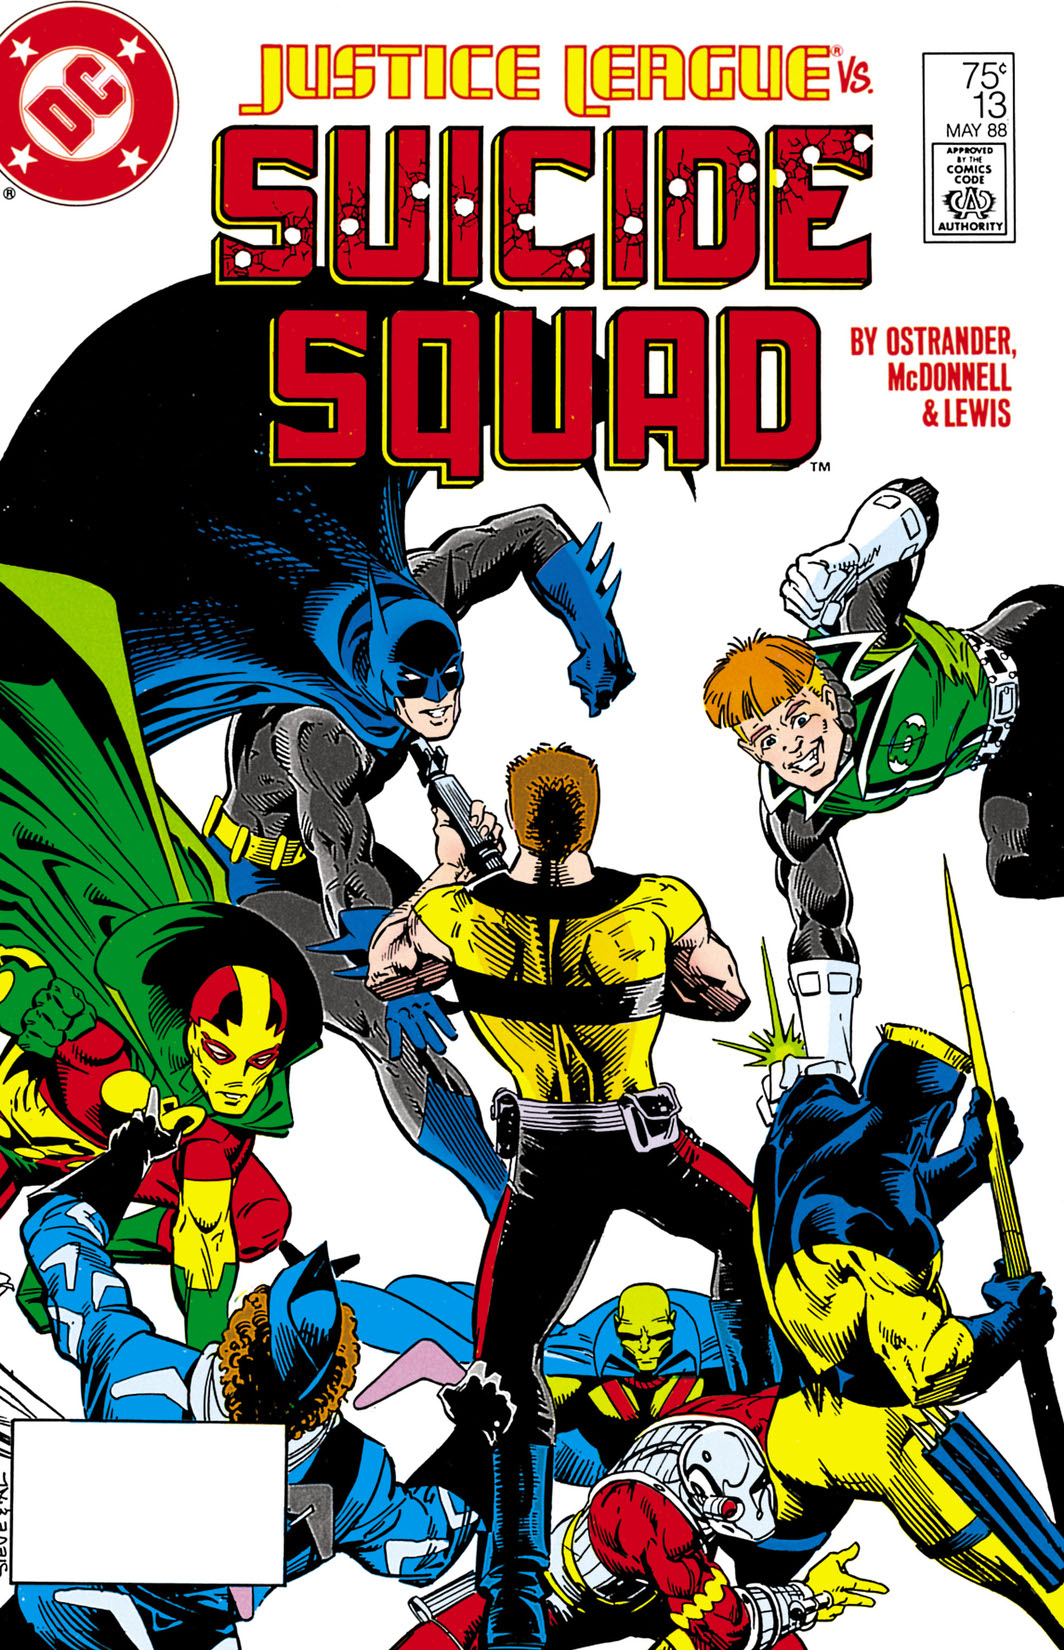 Suicide Squad (1987-) #13 preview images